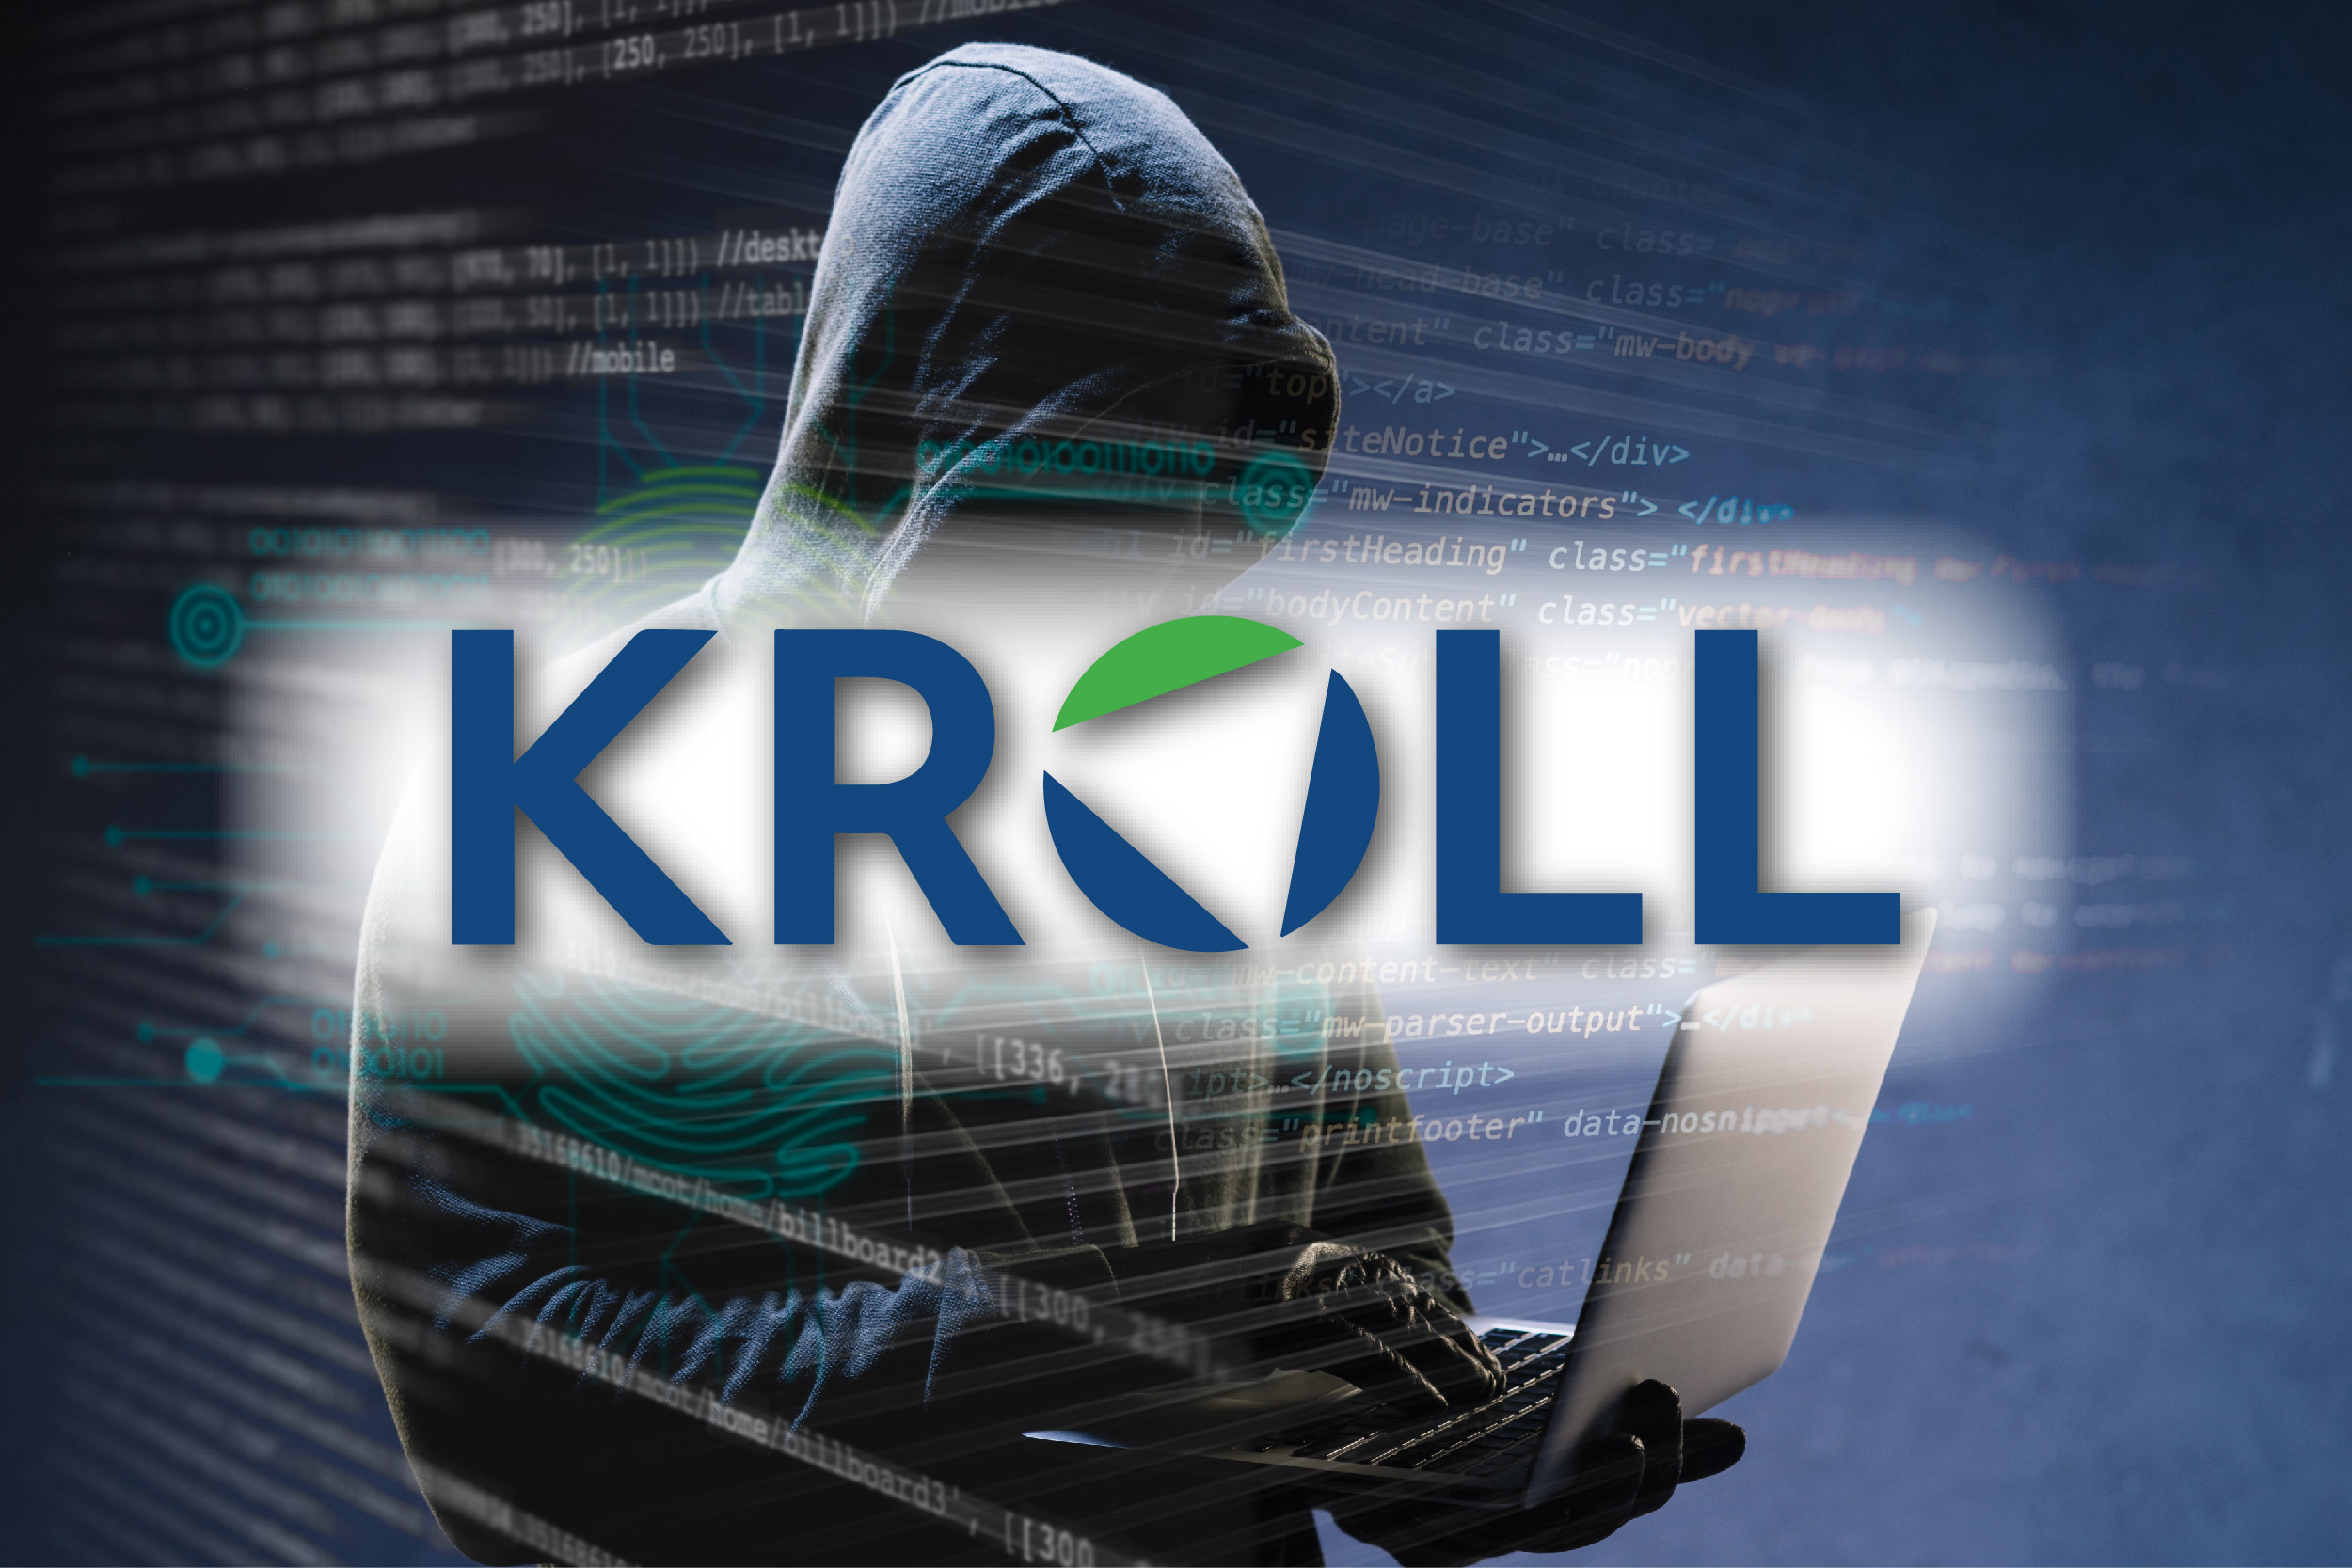 Discord.io Hacked: Over 760K User's Sensitive Data Stolen